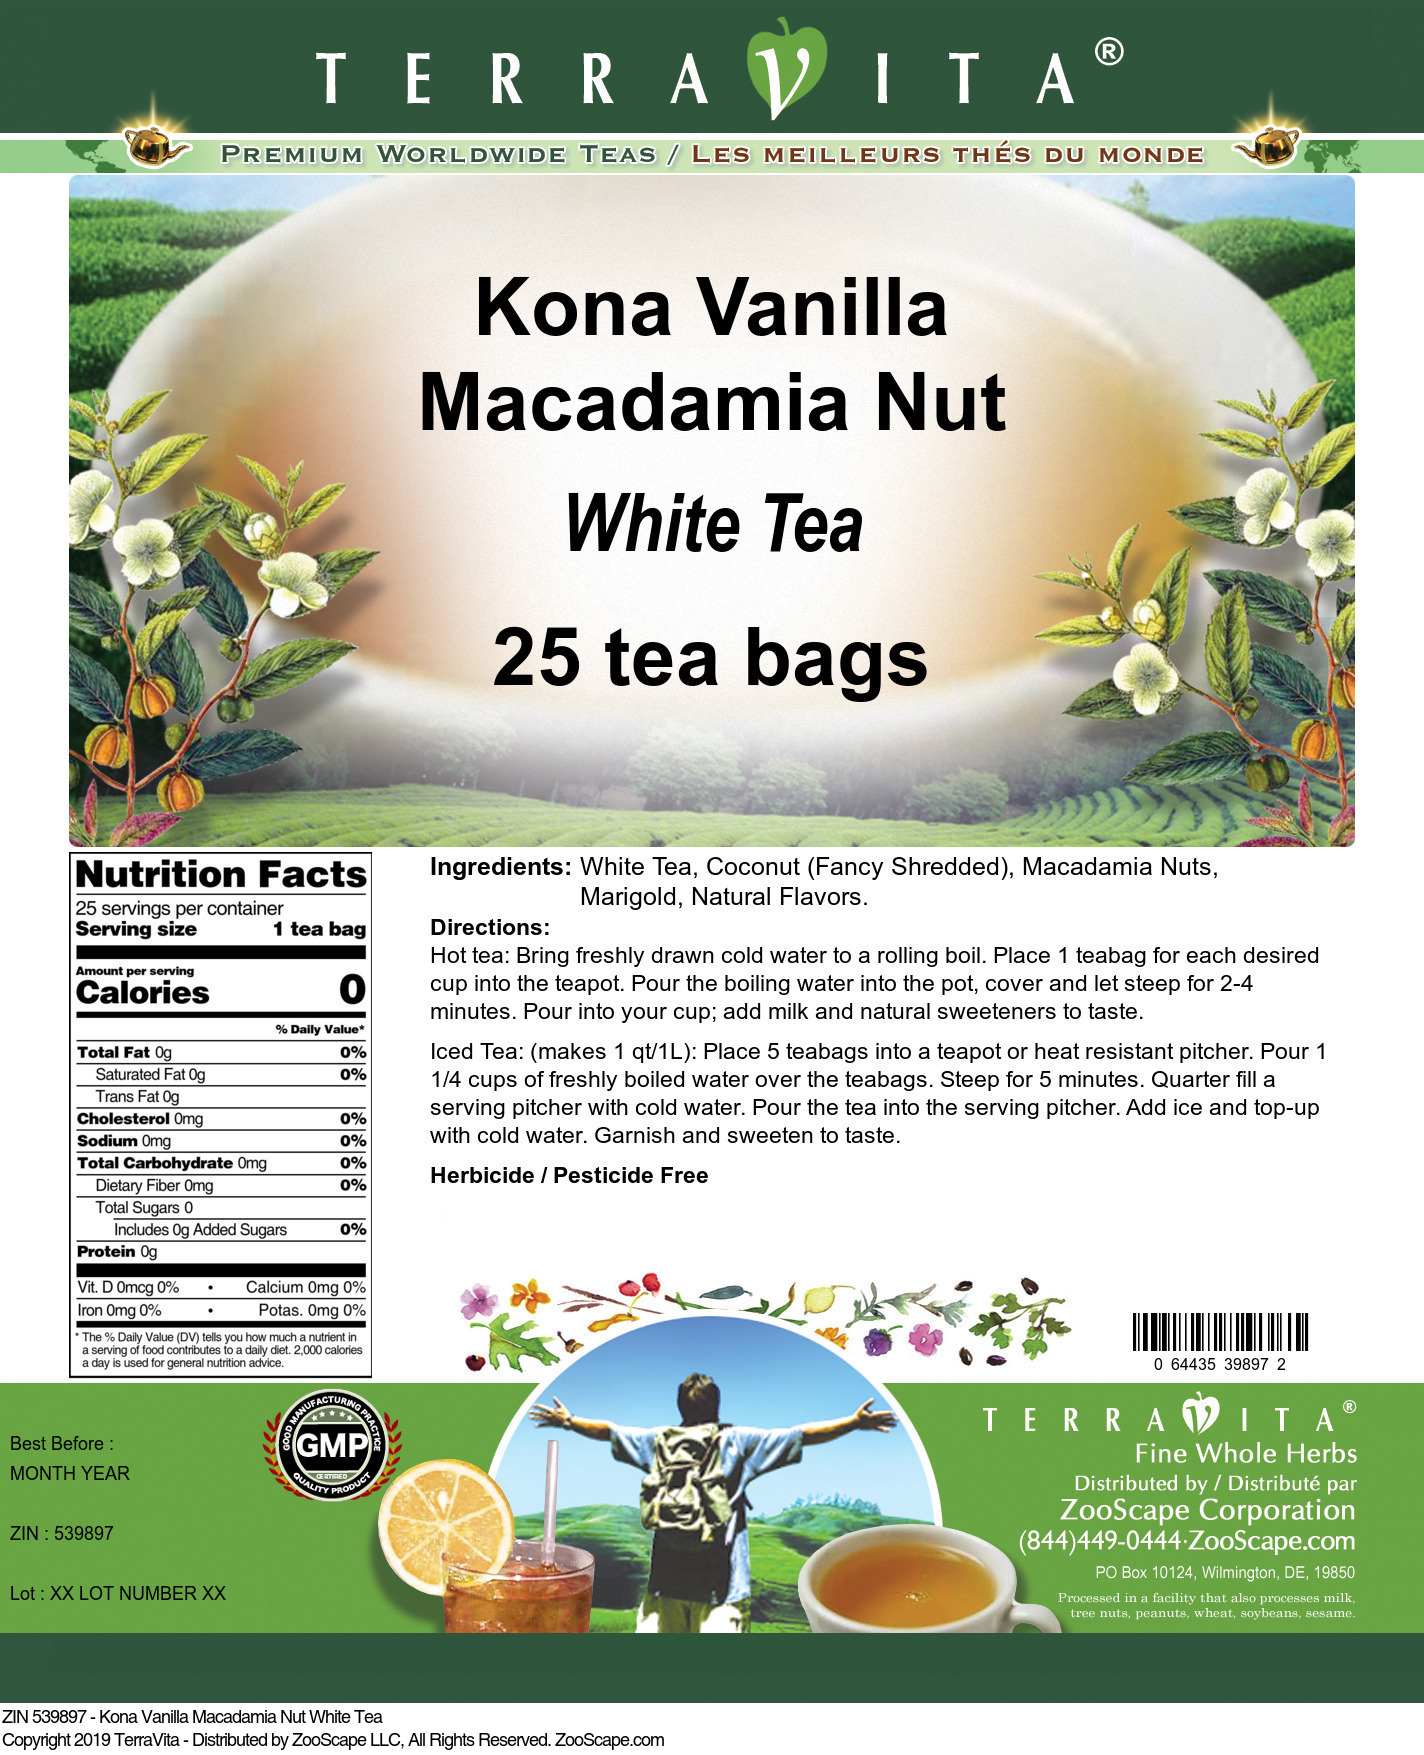 Kona Vanilla Macadamia Nut White Tea - Label